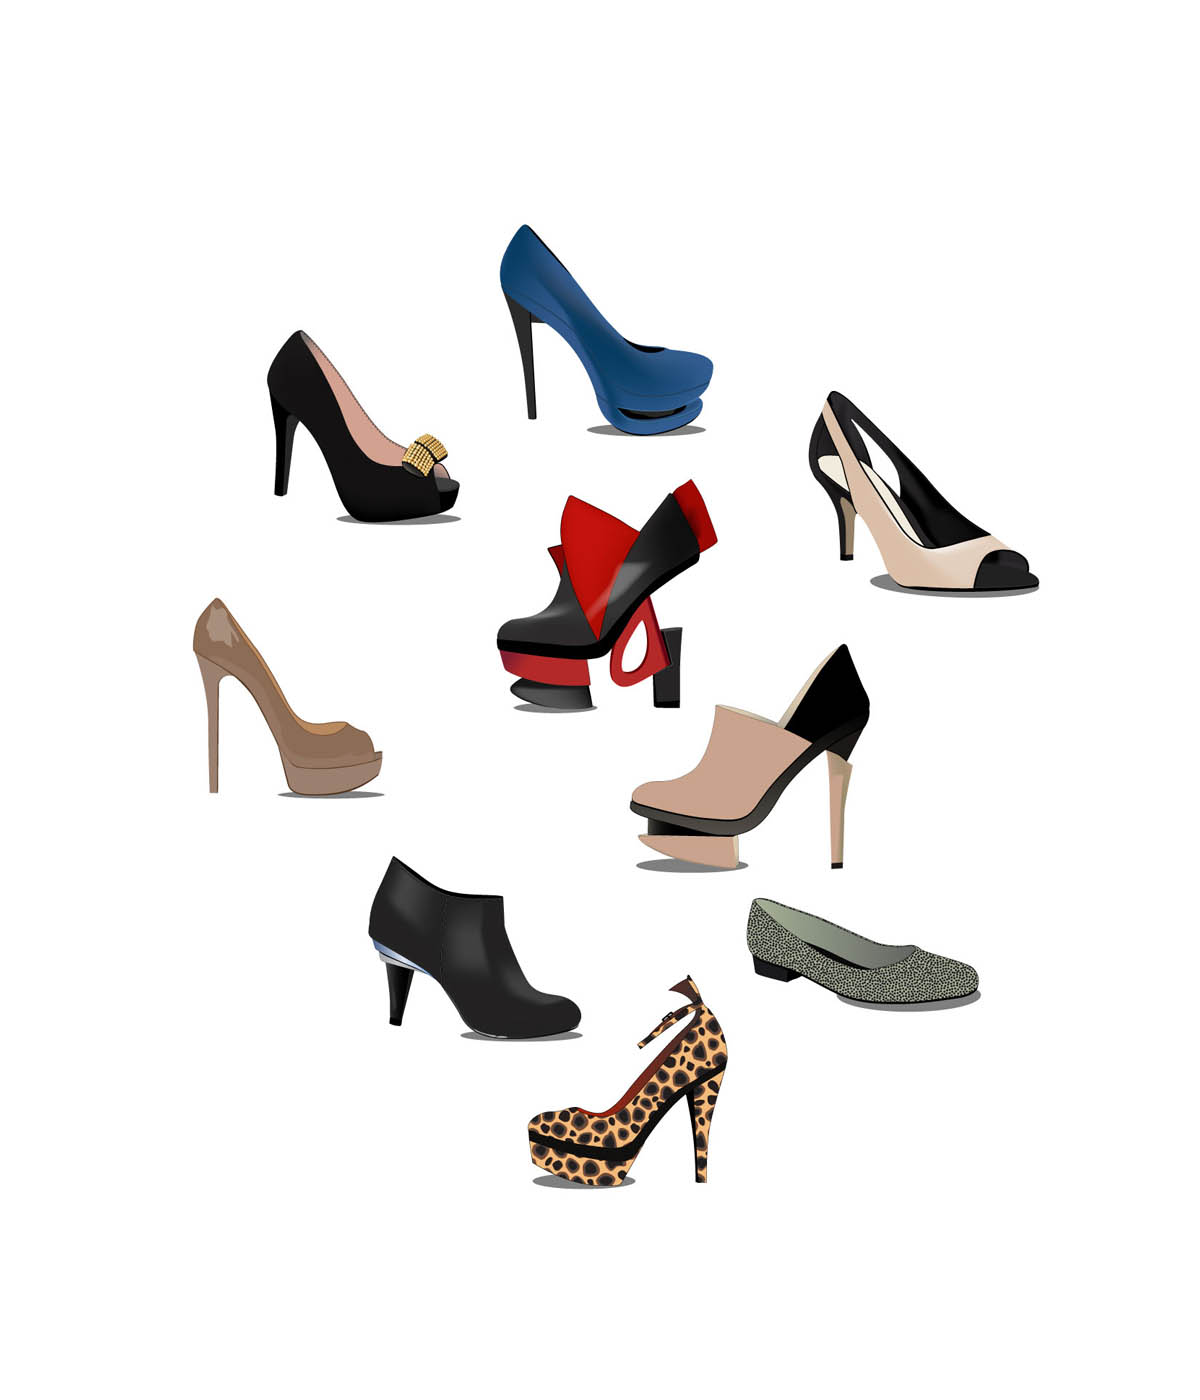 Stylish Women Shoes Vector | www.